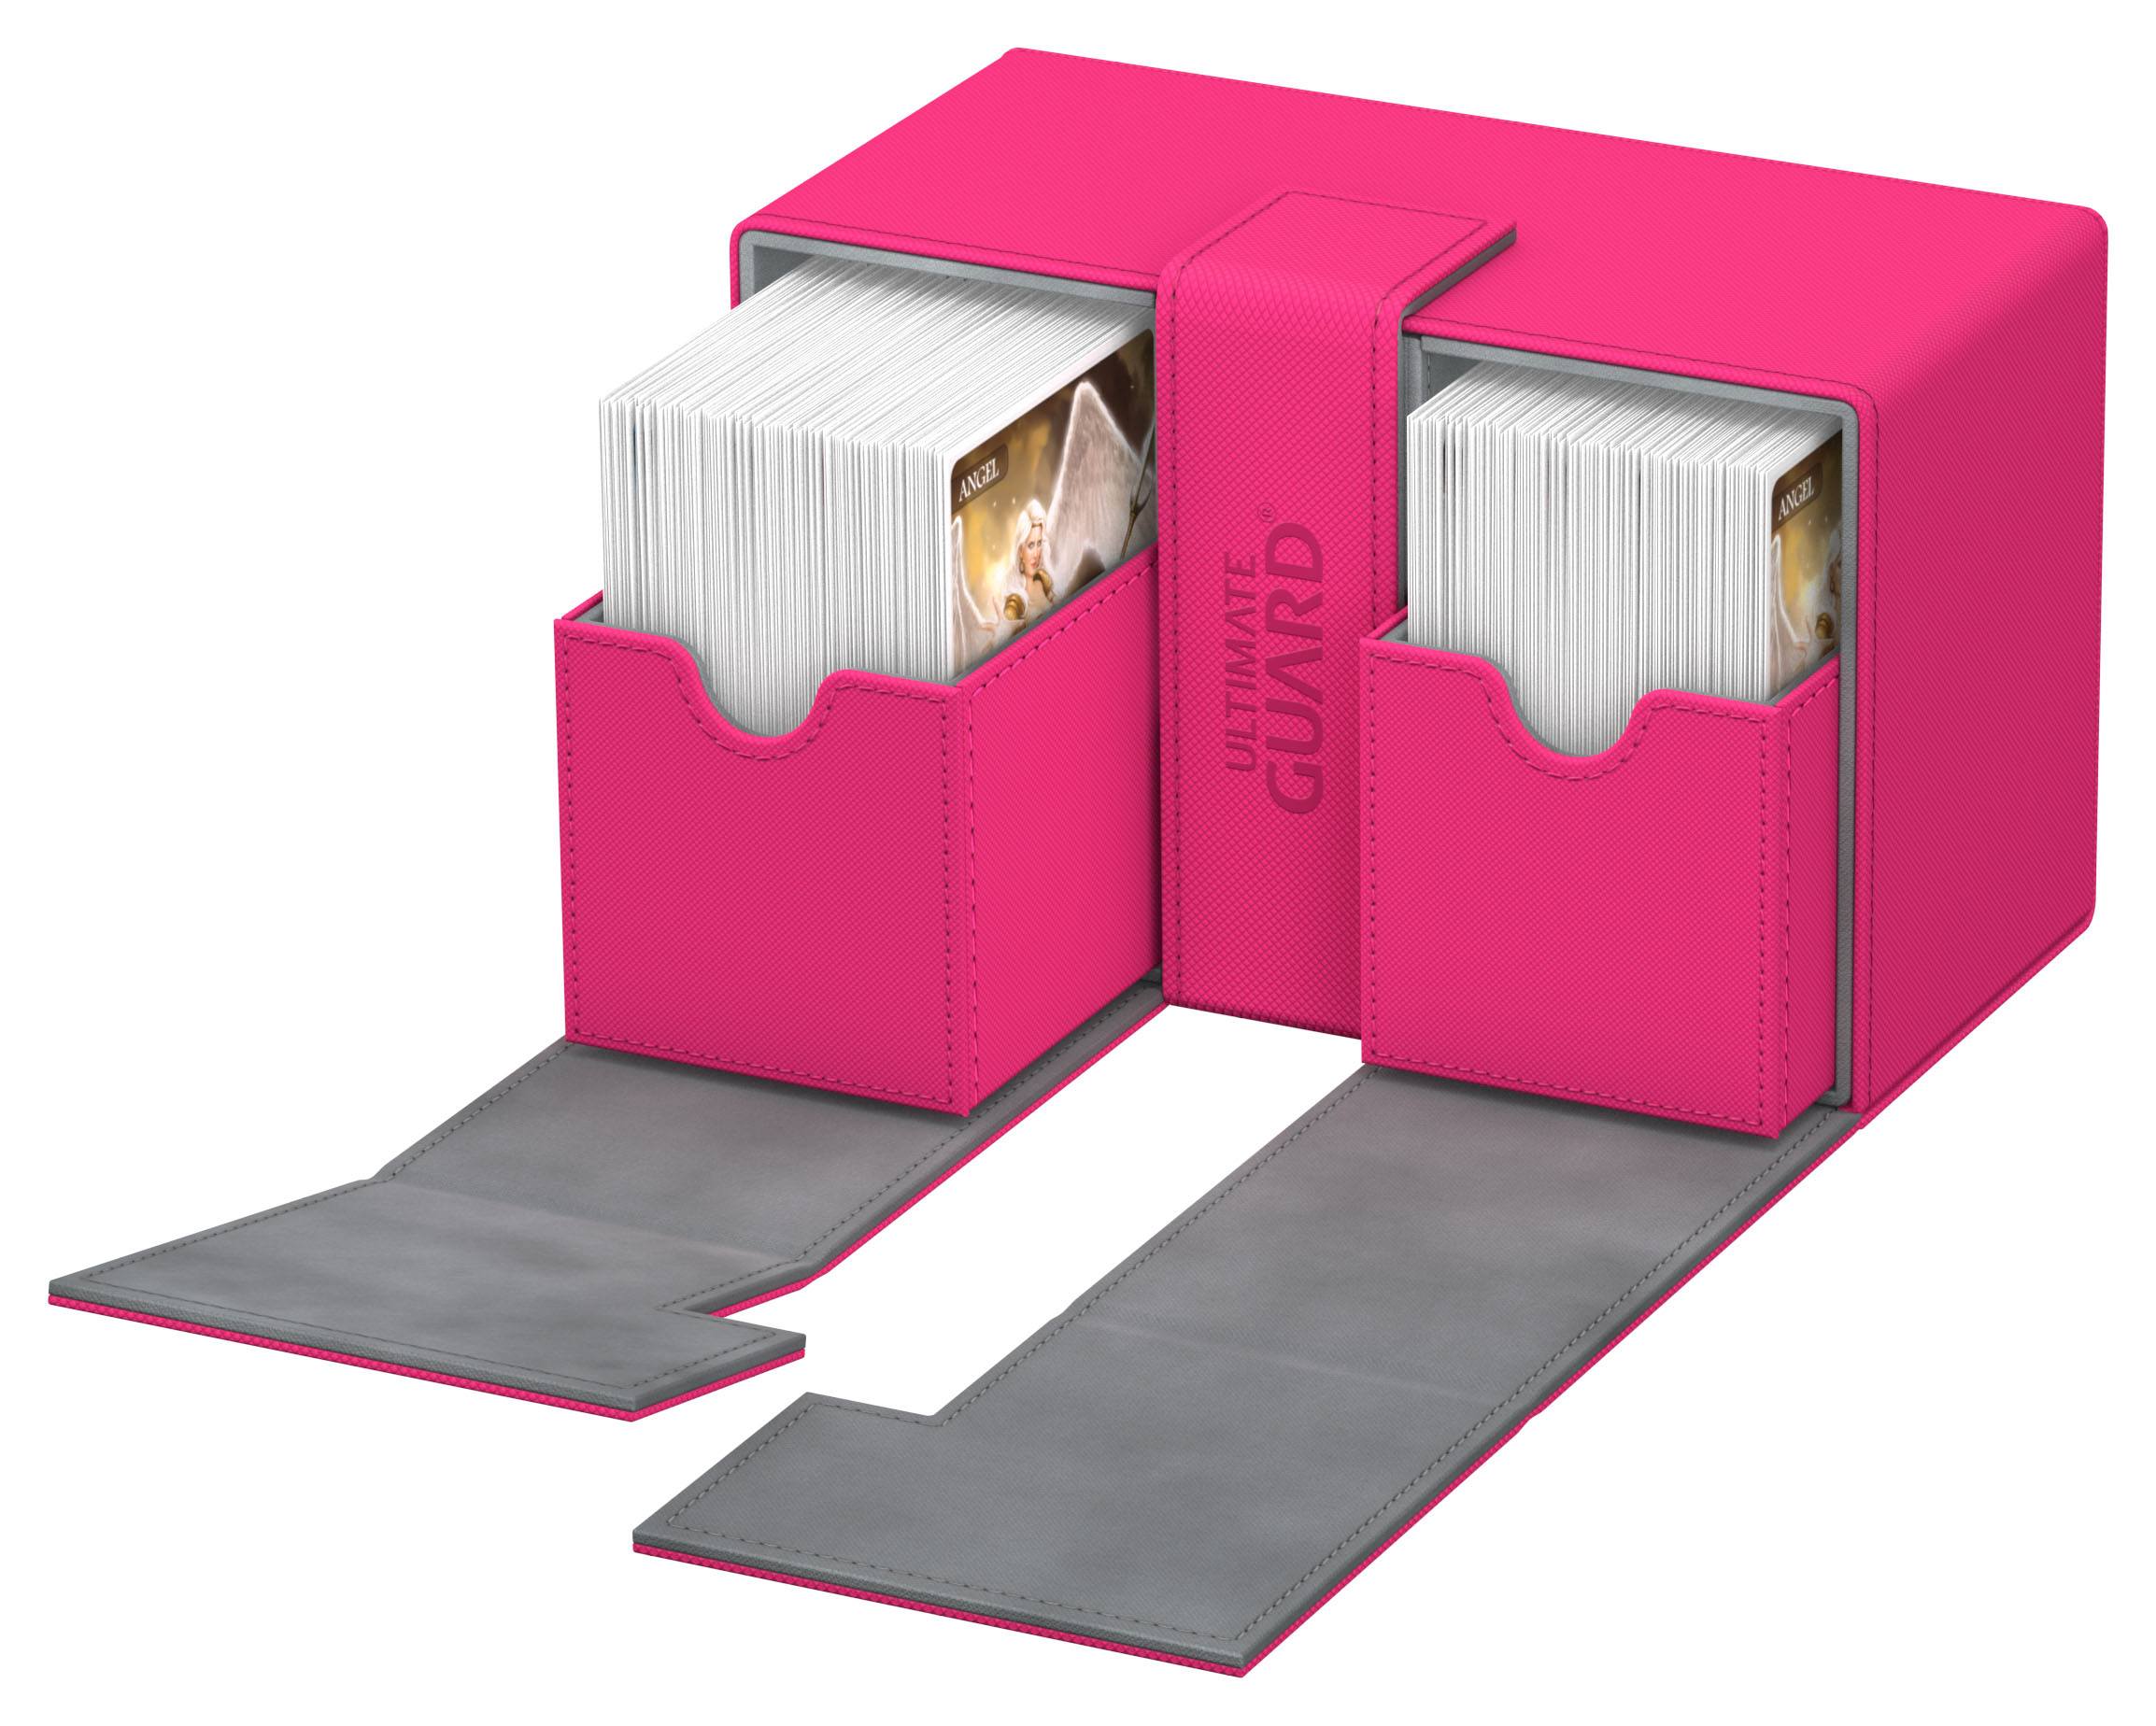 Flip´n´Tray Deckbox 160+ XenoSkin Ultimate Guard pink